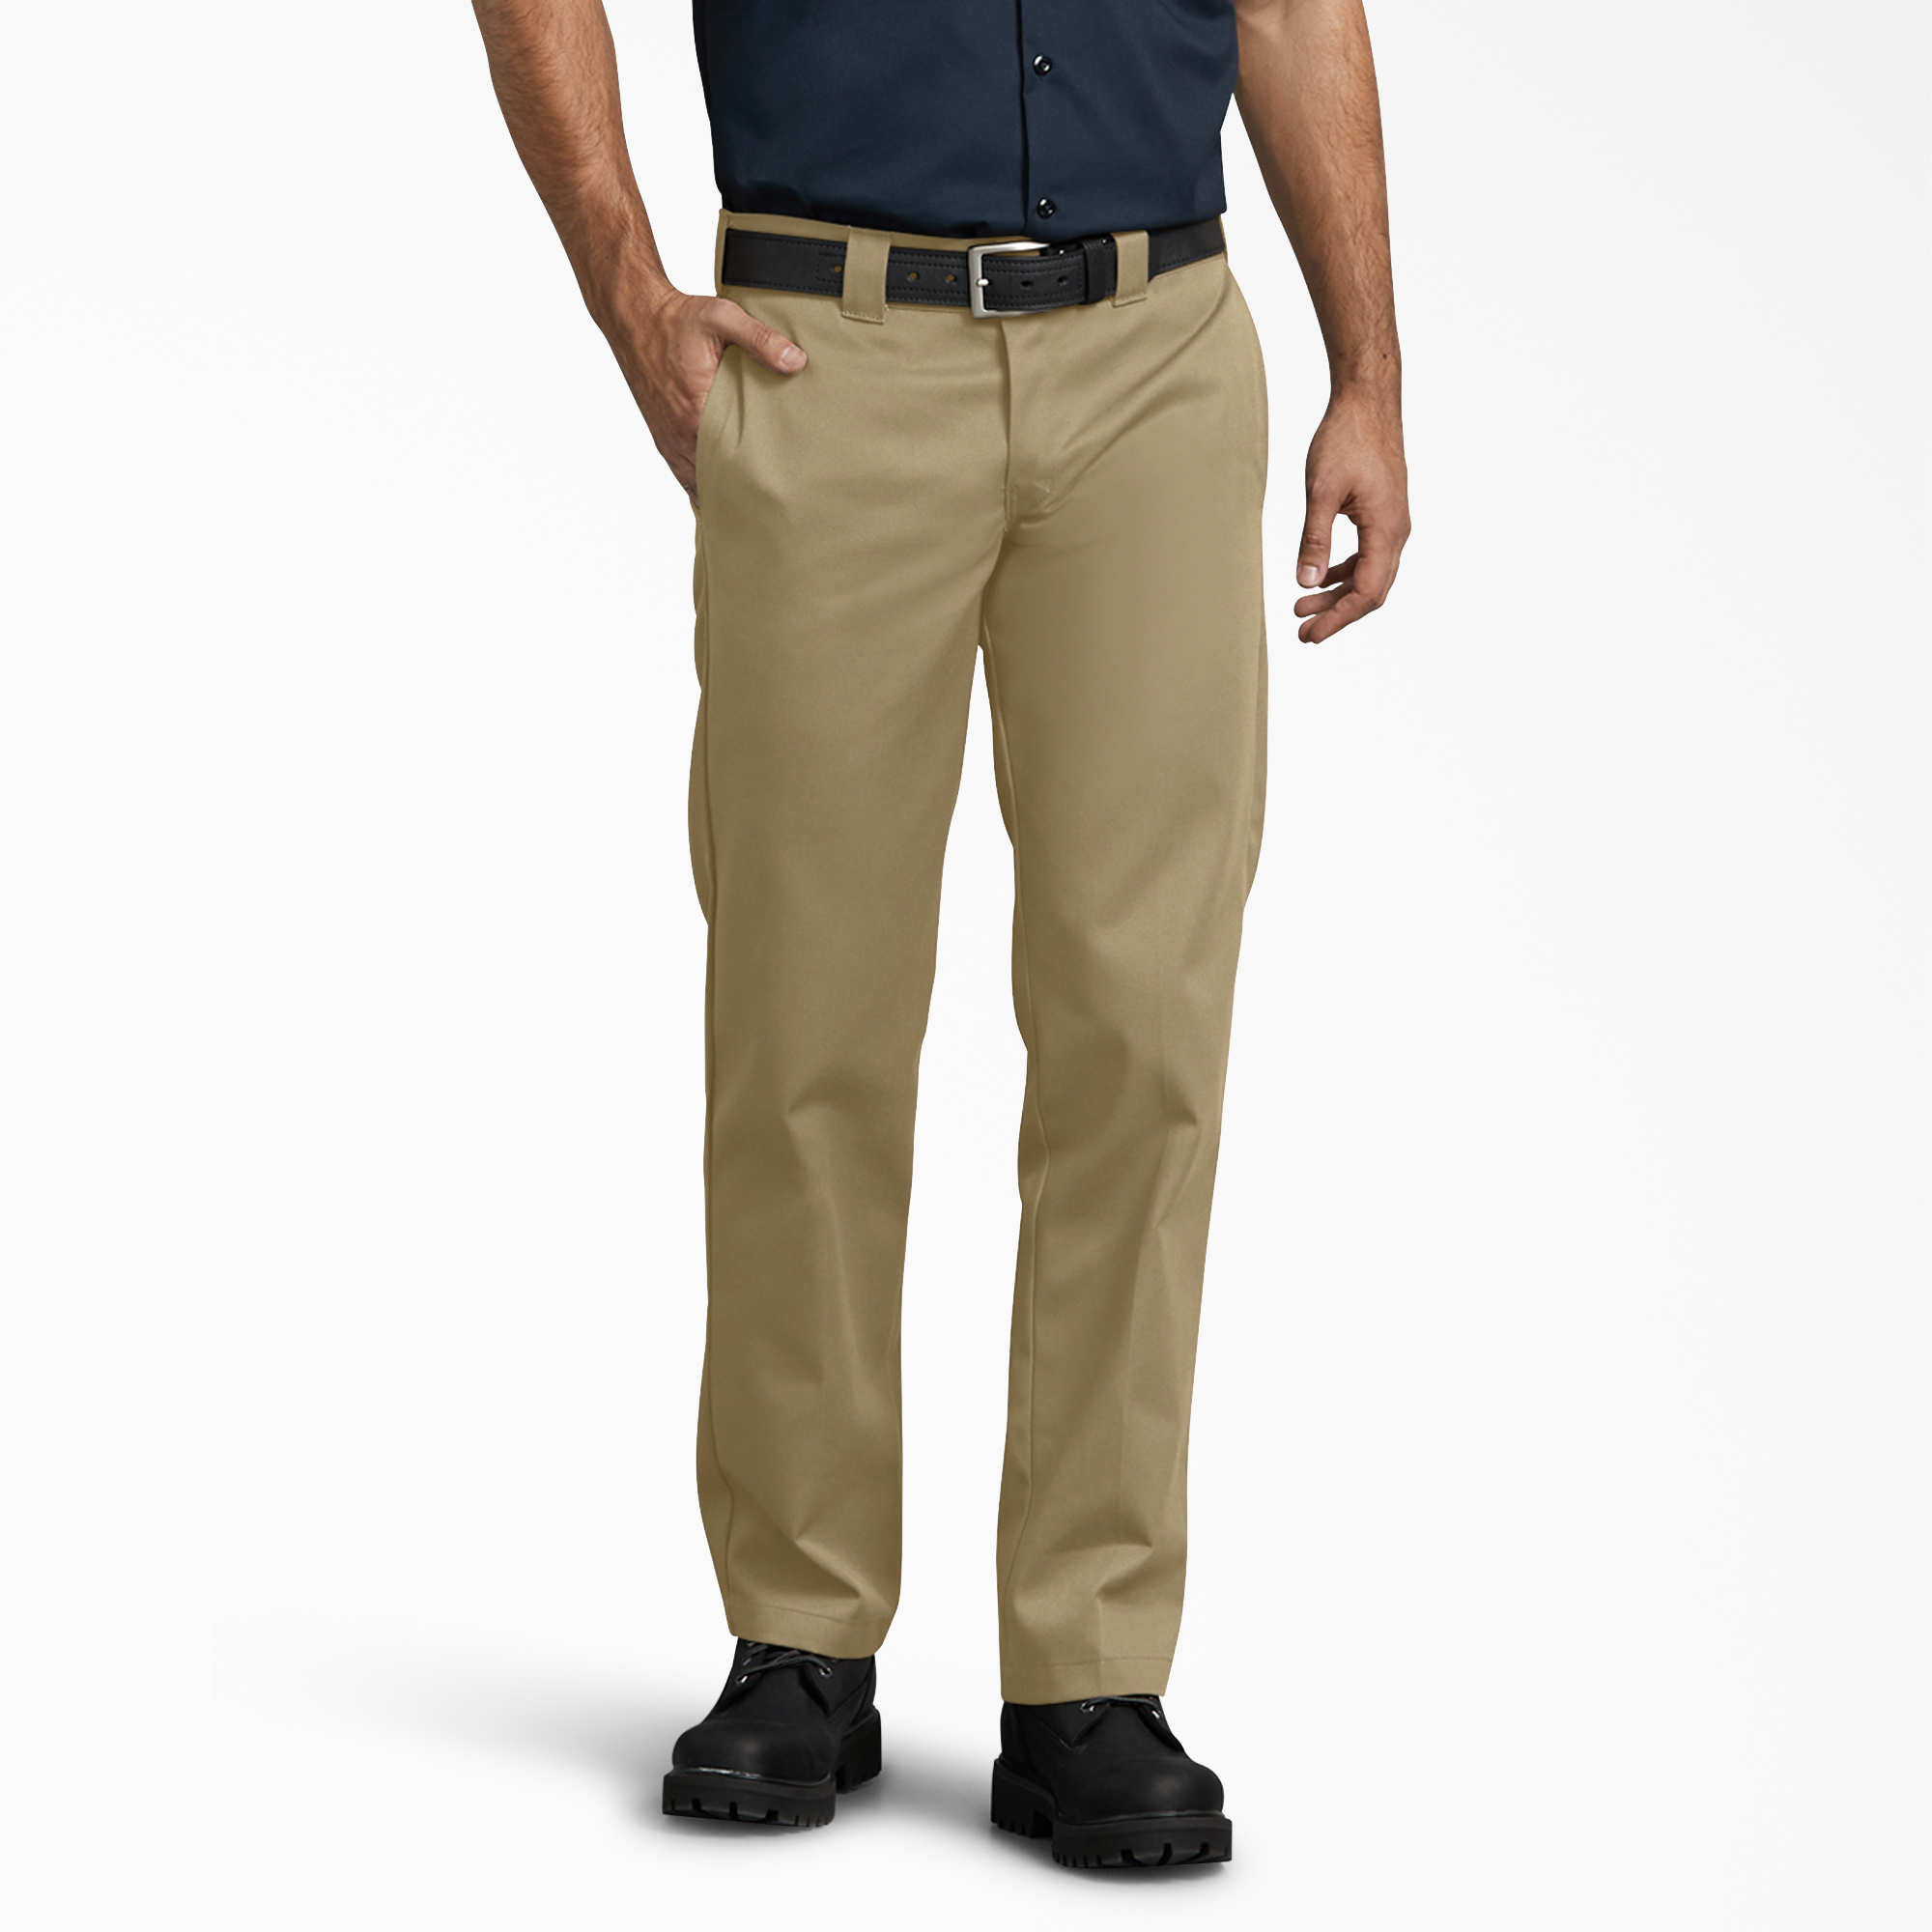 Slim Fit Straight Leg Work Pants - Military Khaki (KH)